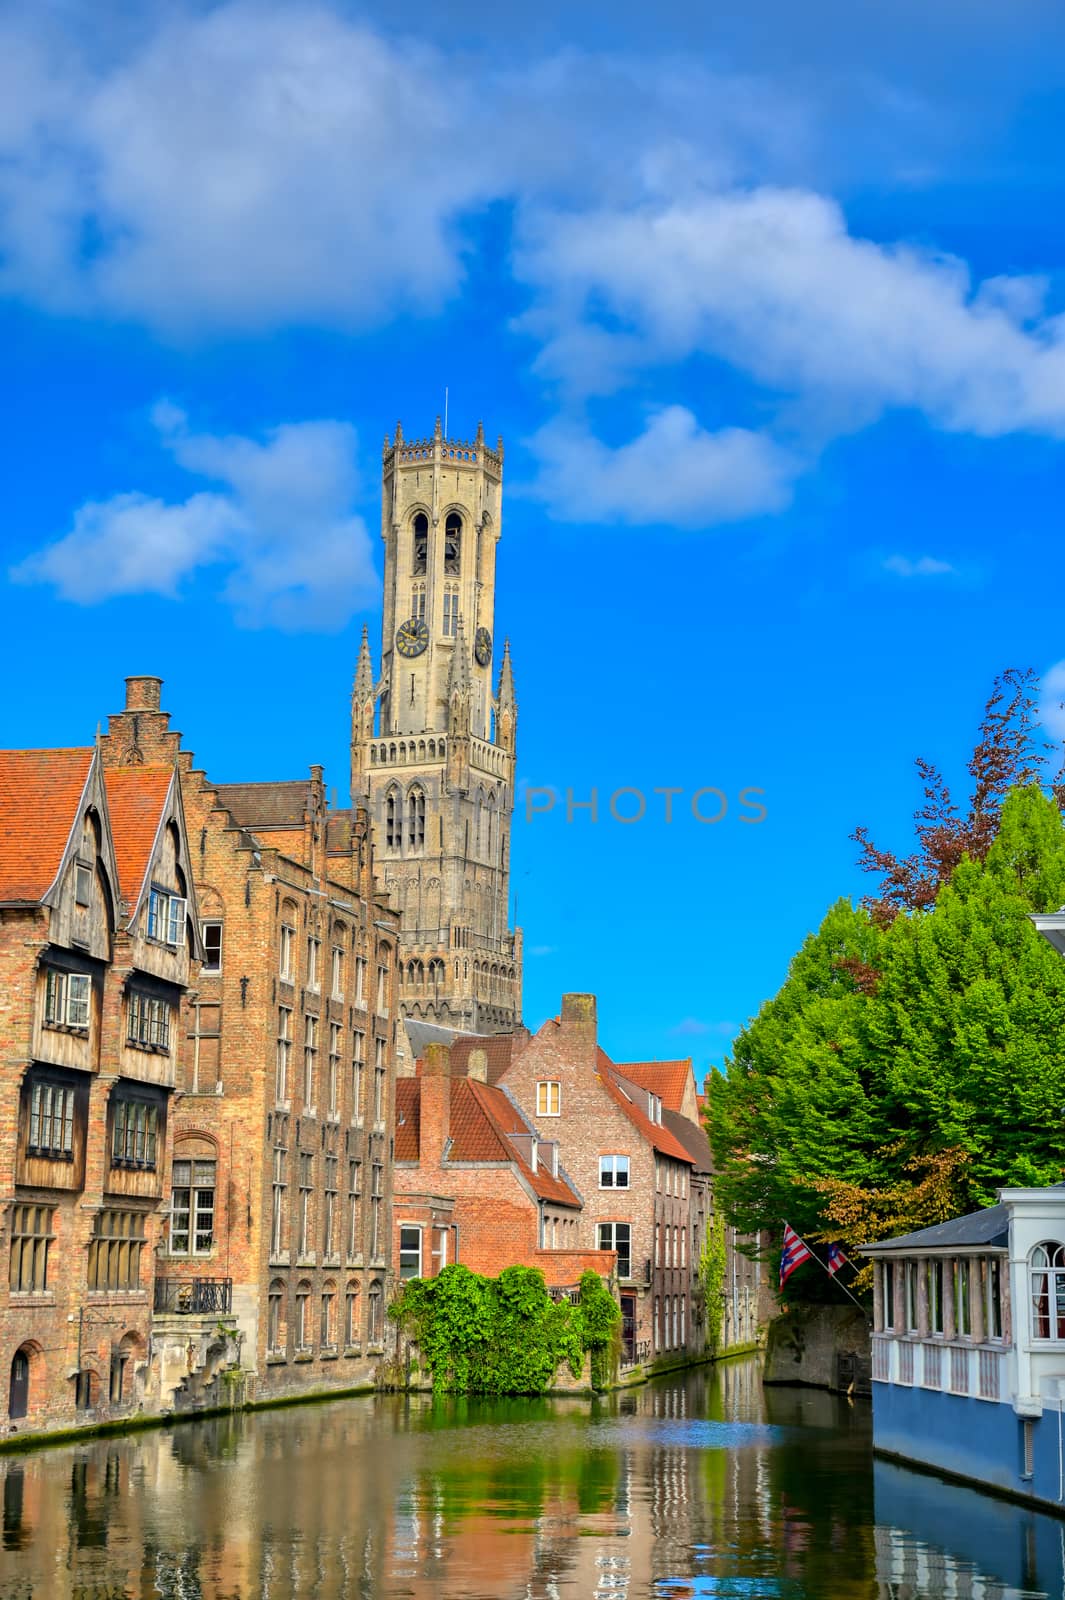 Bruges, Belgium canals by jbyard22